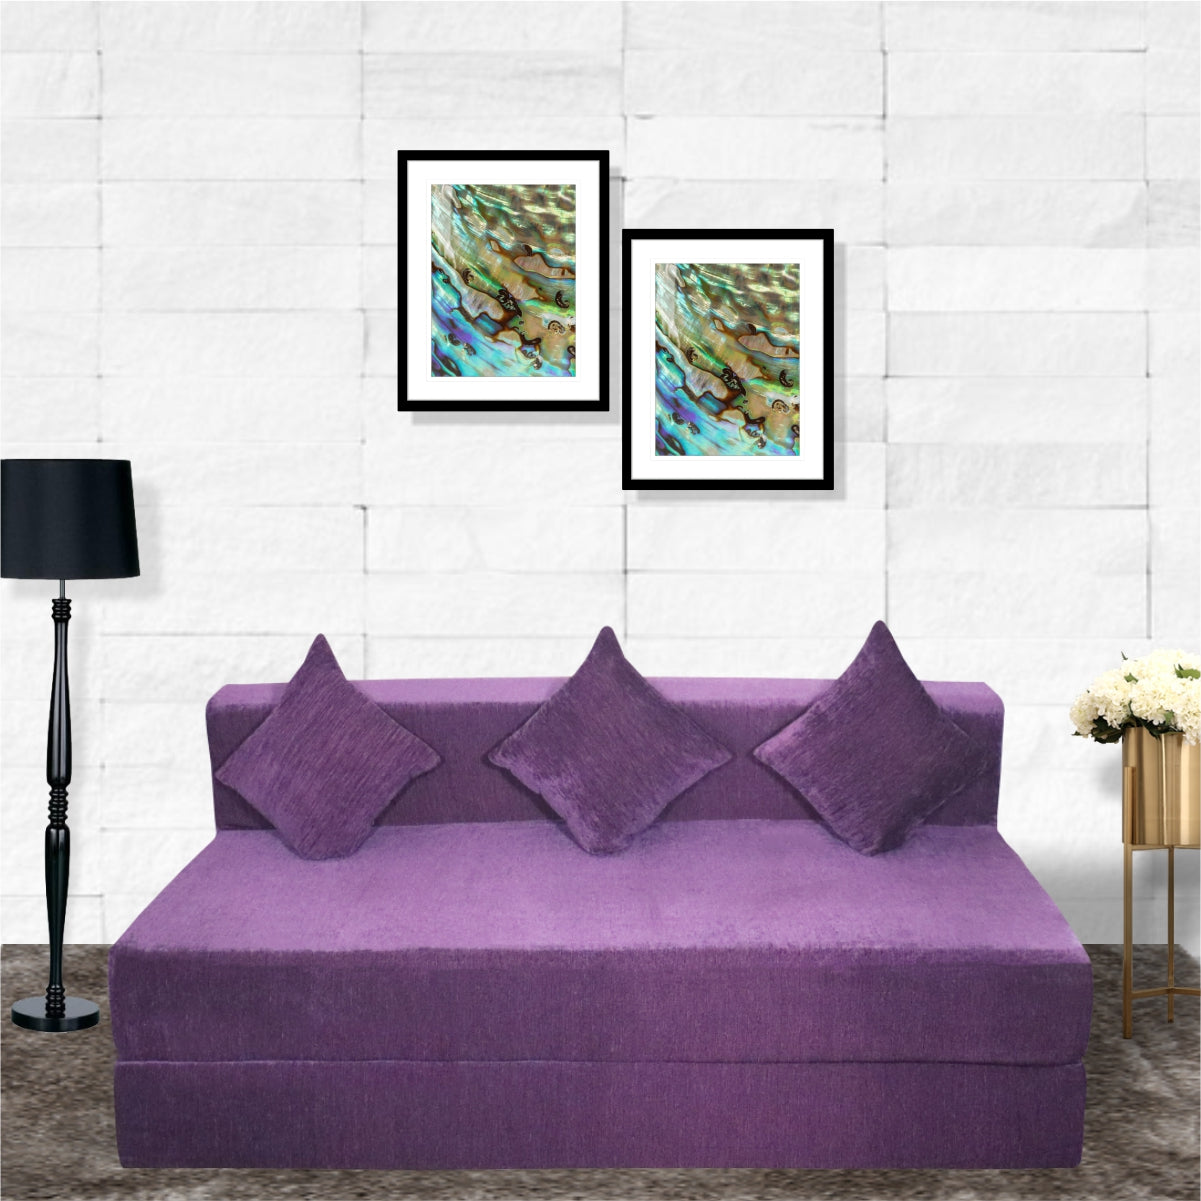 Seventh Heaven Purple Morphino Fabric 6×6 Sofa cum Bed with 3 Cushion